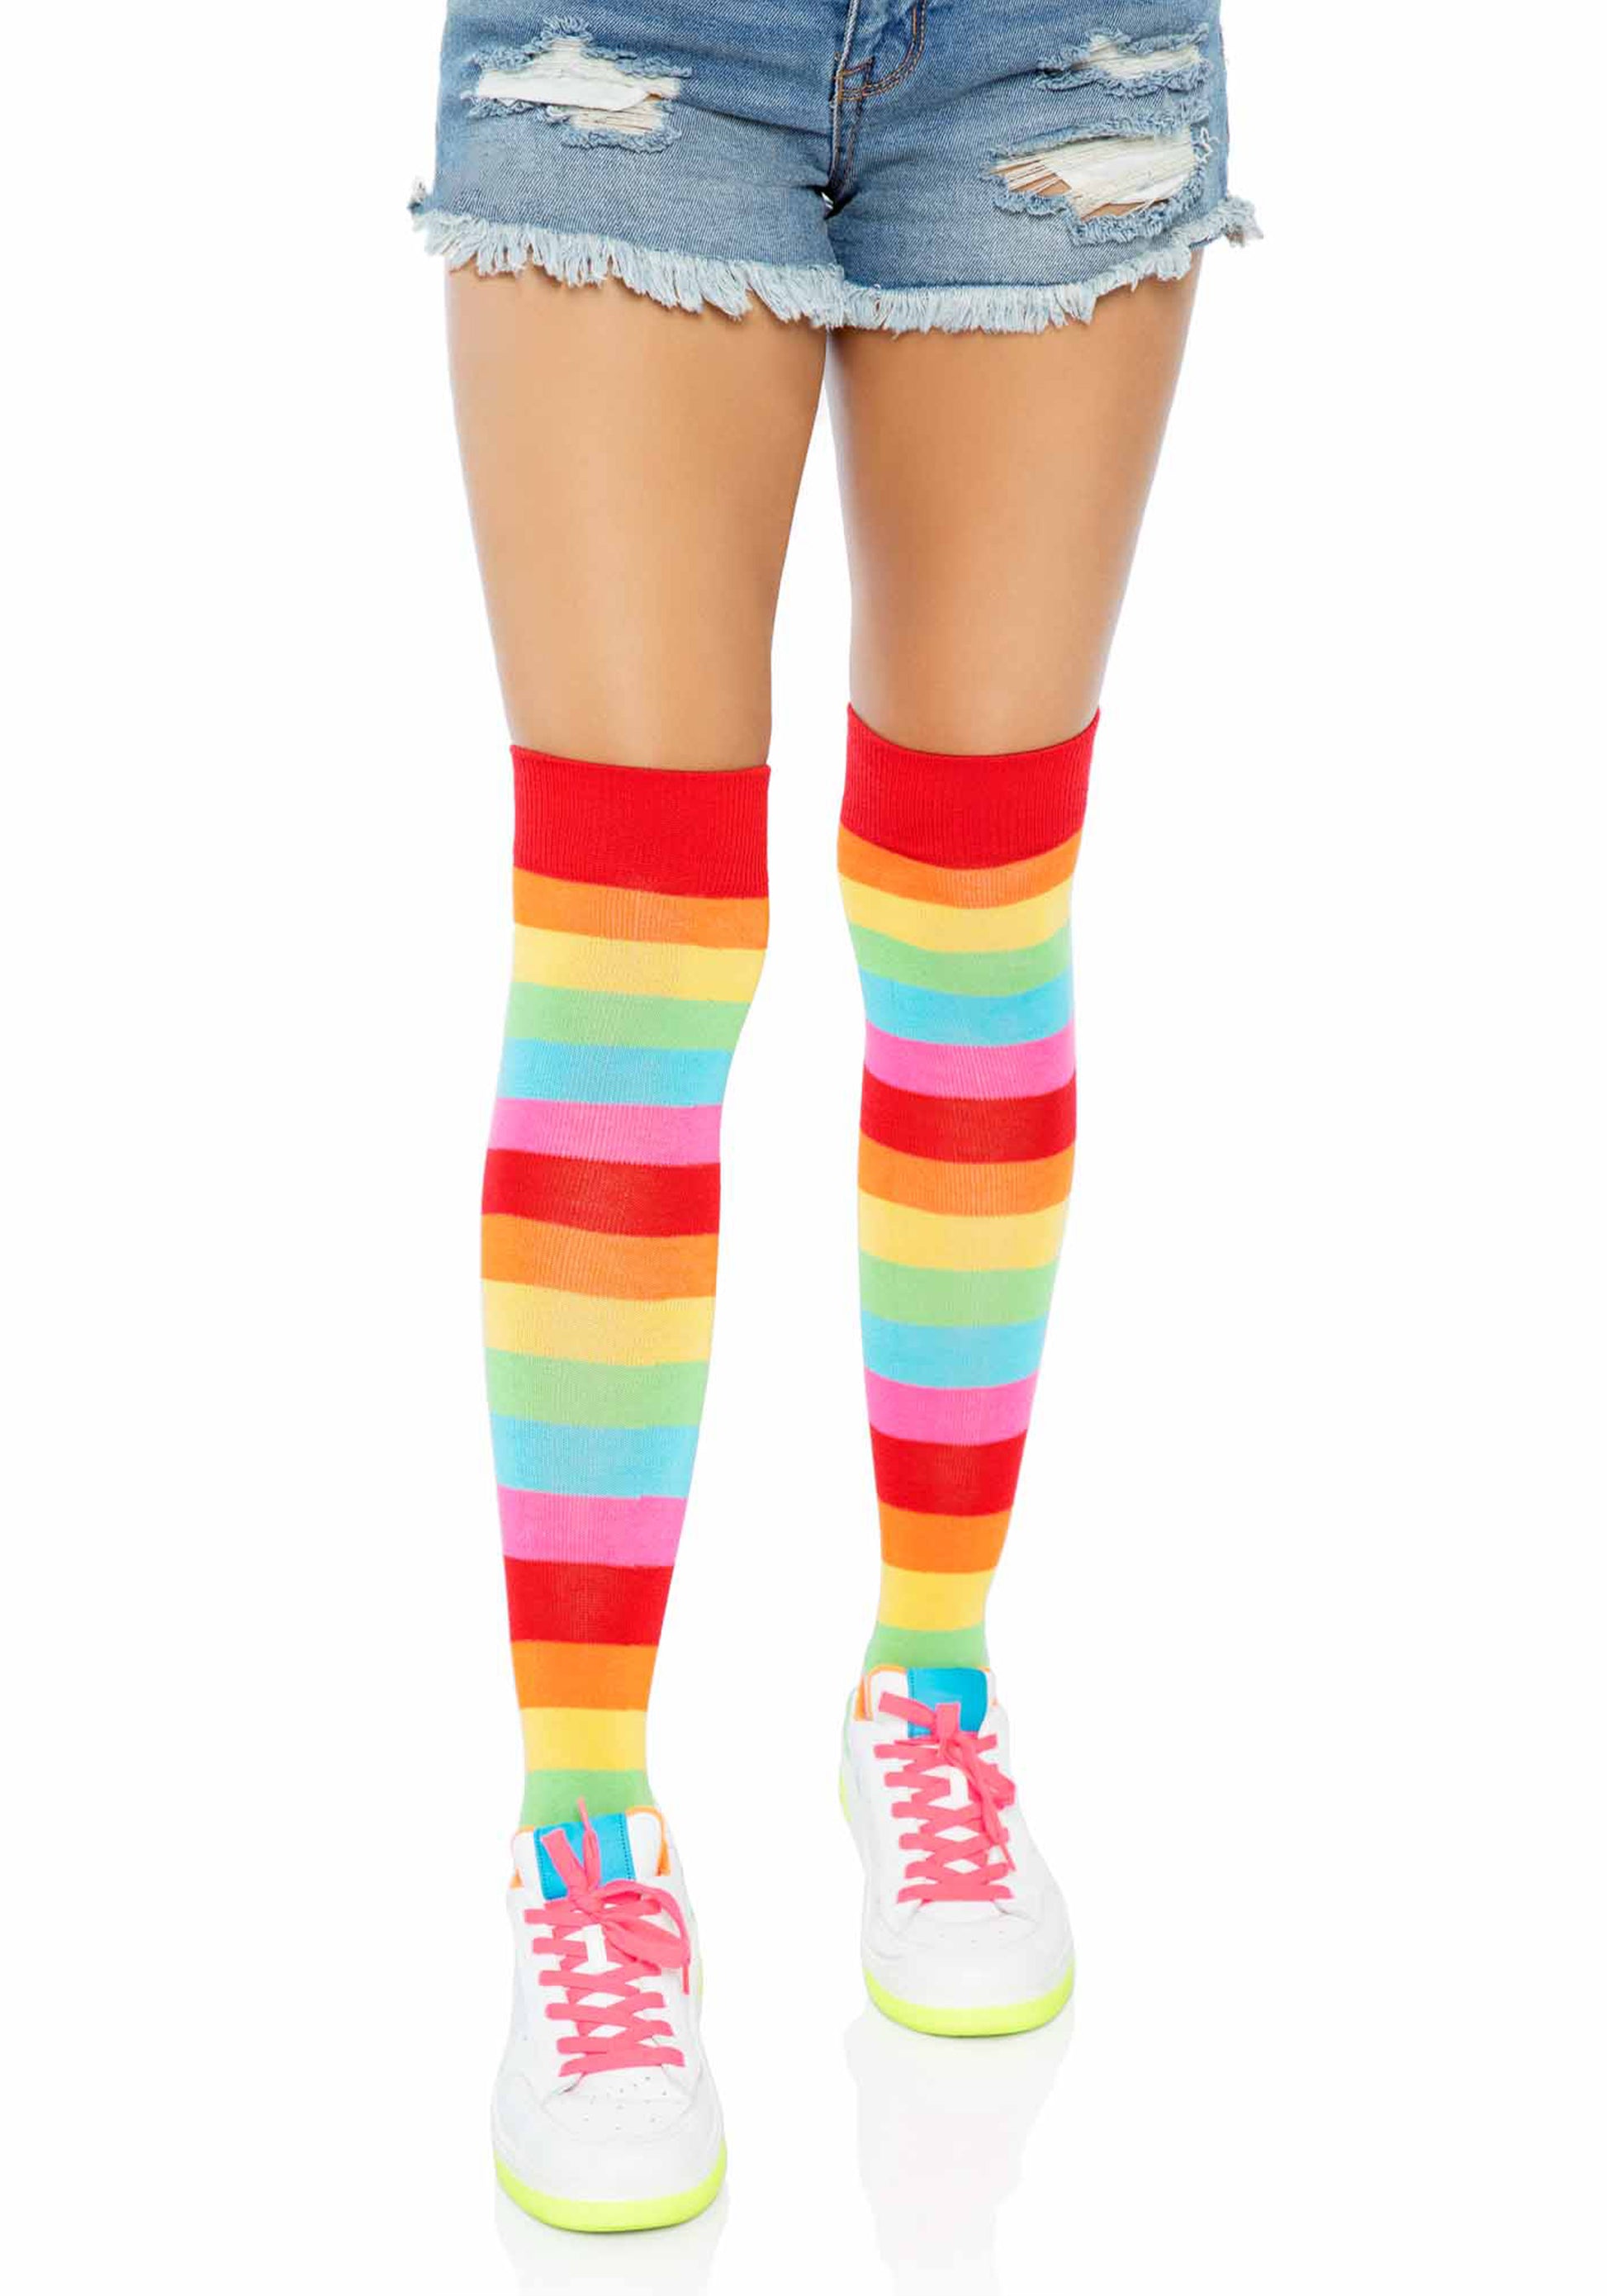 Leg Avenue 6334 Rainbow Thigh-High Socks - Multicoloured horizontal stripe over the knee socks with elasticated cuff.